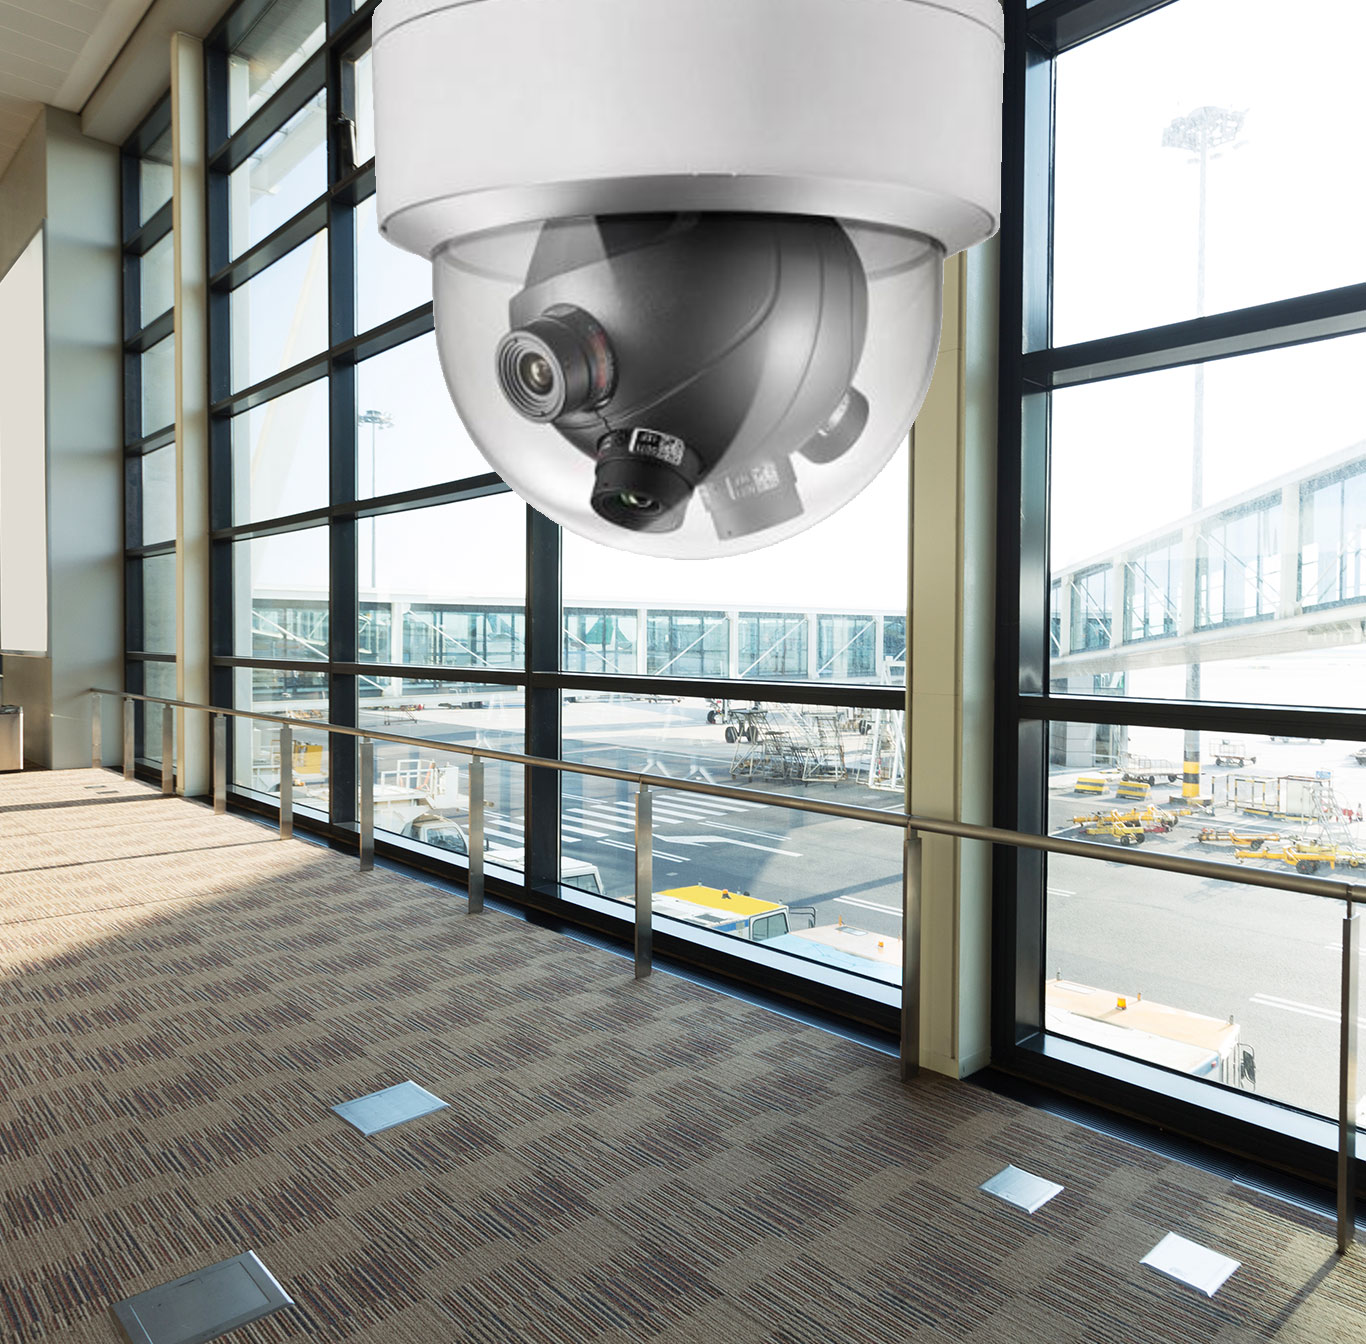 Commercial Video Surveillance security camera